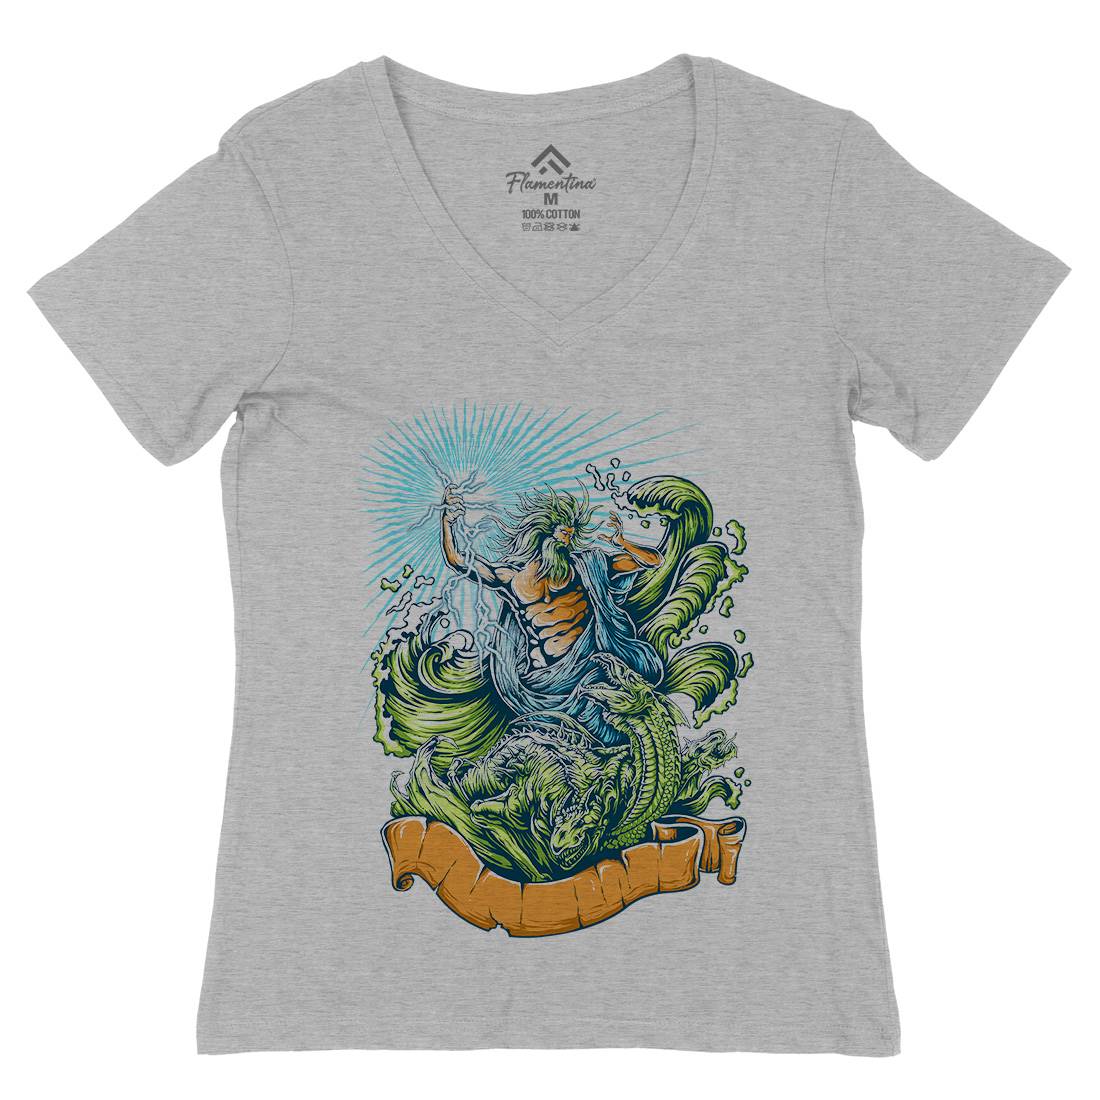 Poseidon Womens Organic V-Neck T-Shirt Navy D067